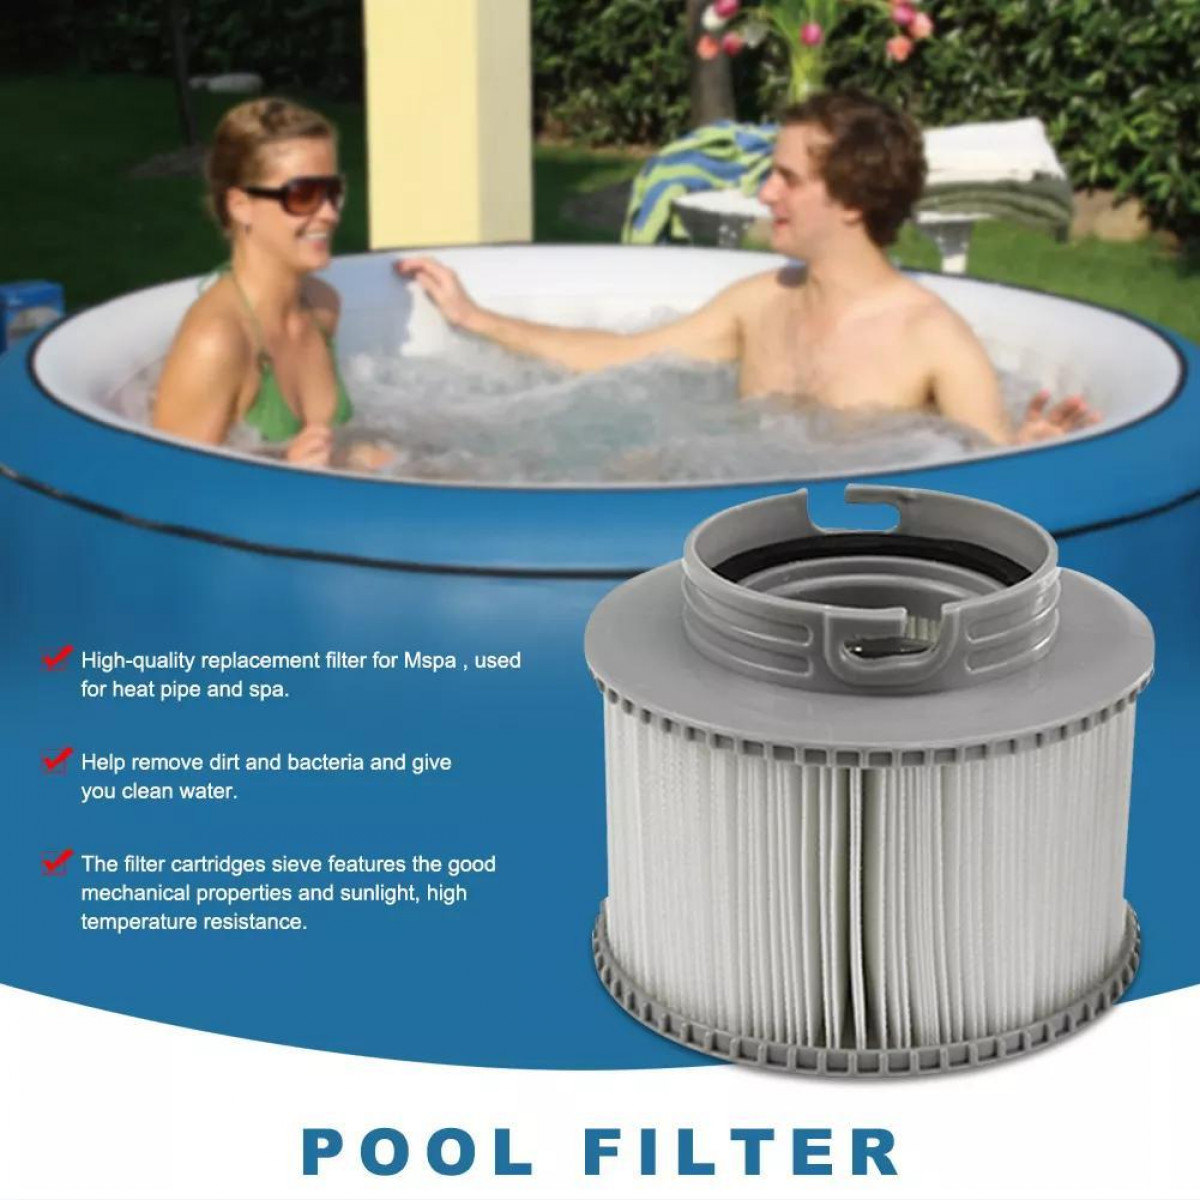 aufblasbare INF / Poolfilter 2er-Pack MSPA-Pools Weiß FD2089 Poolfilter, Grau für